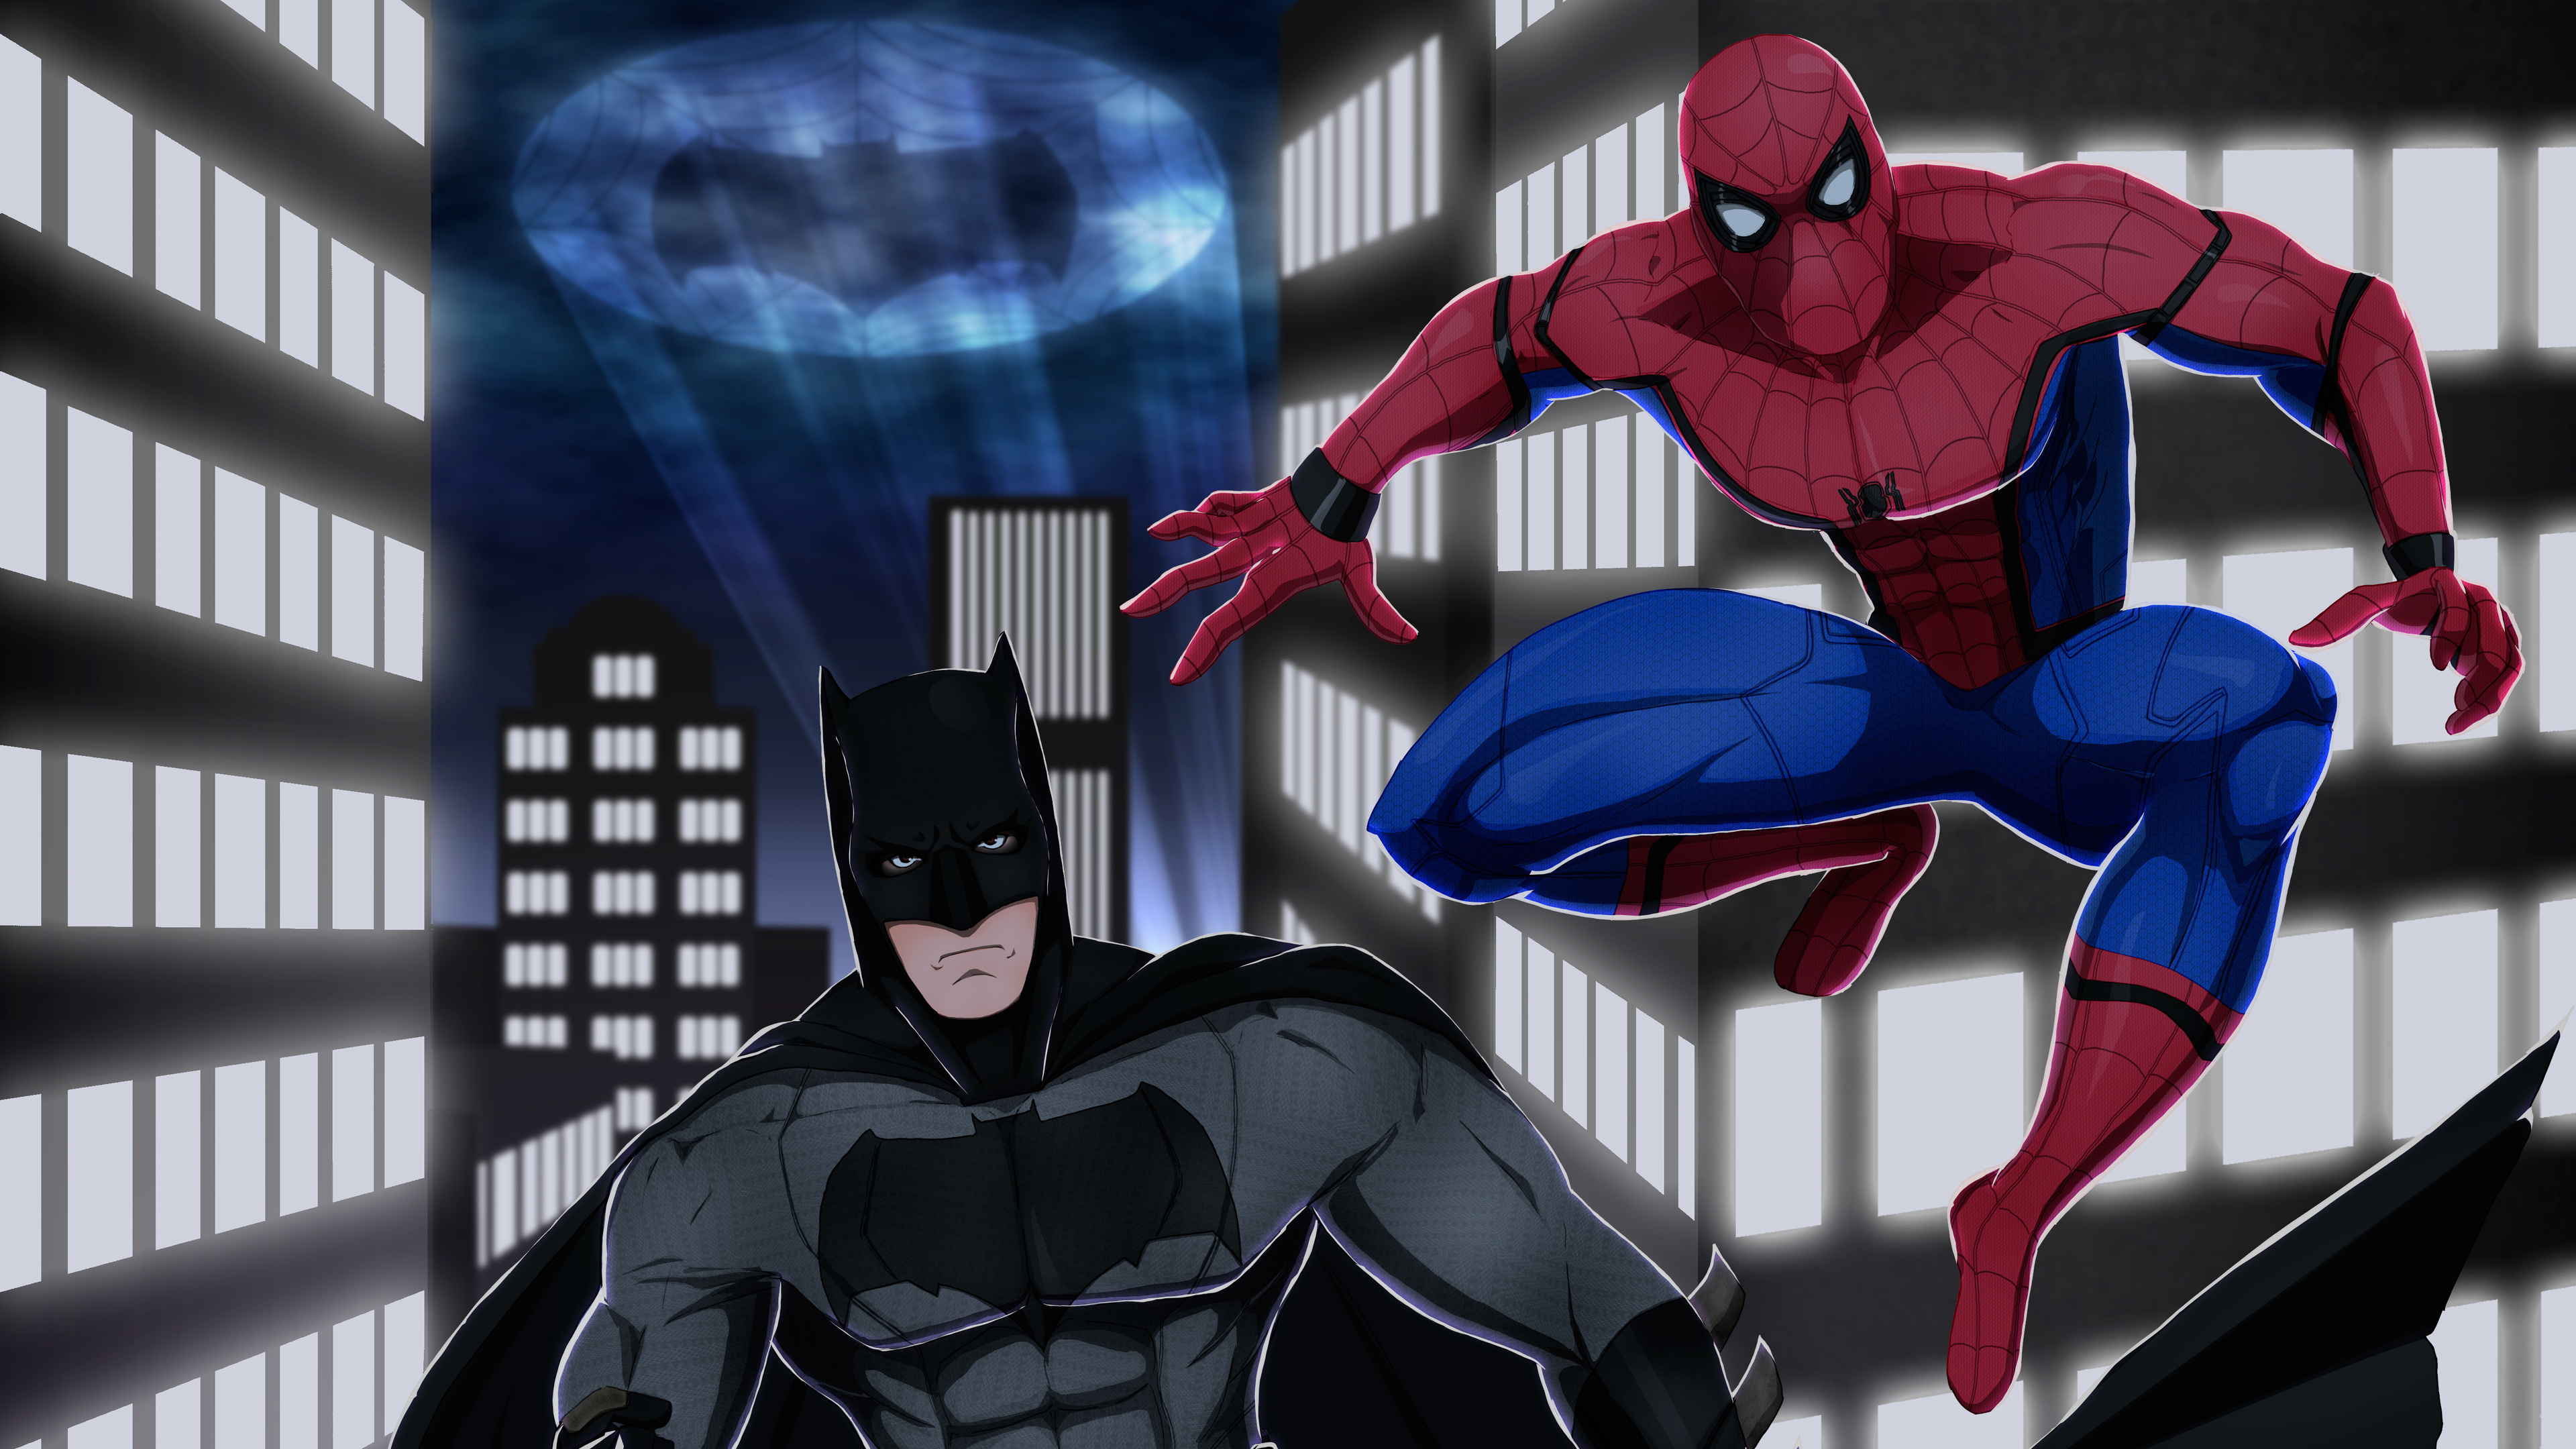 Batman Spiderman 4K wallpaper download